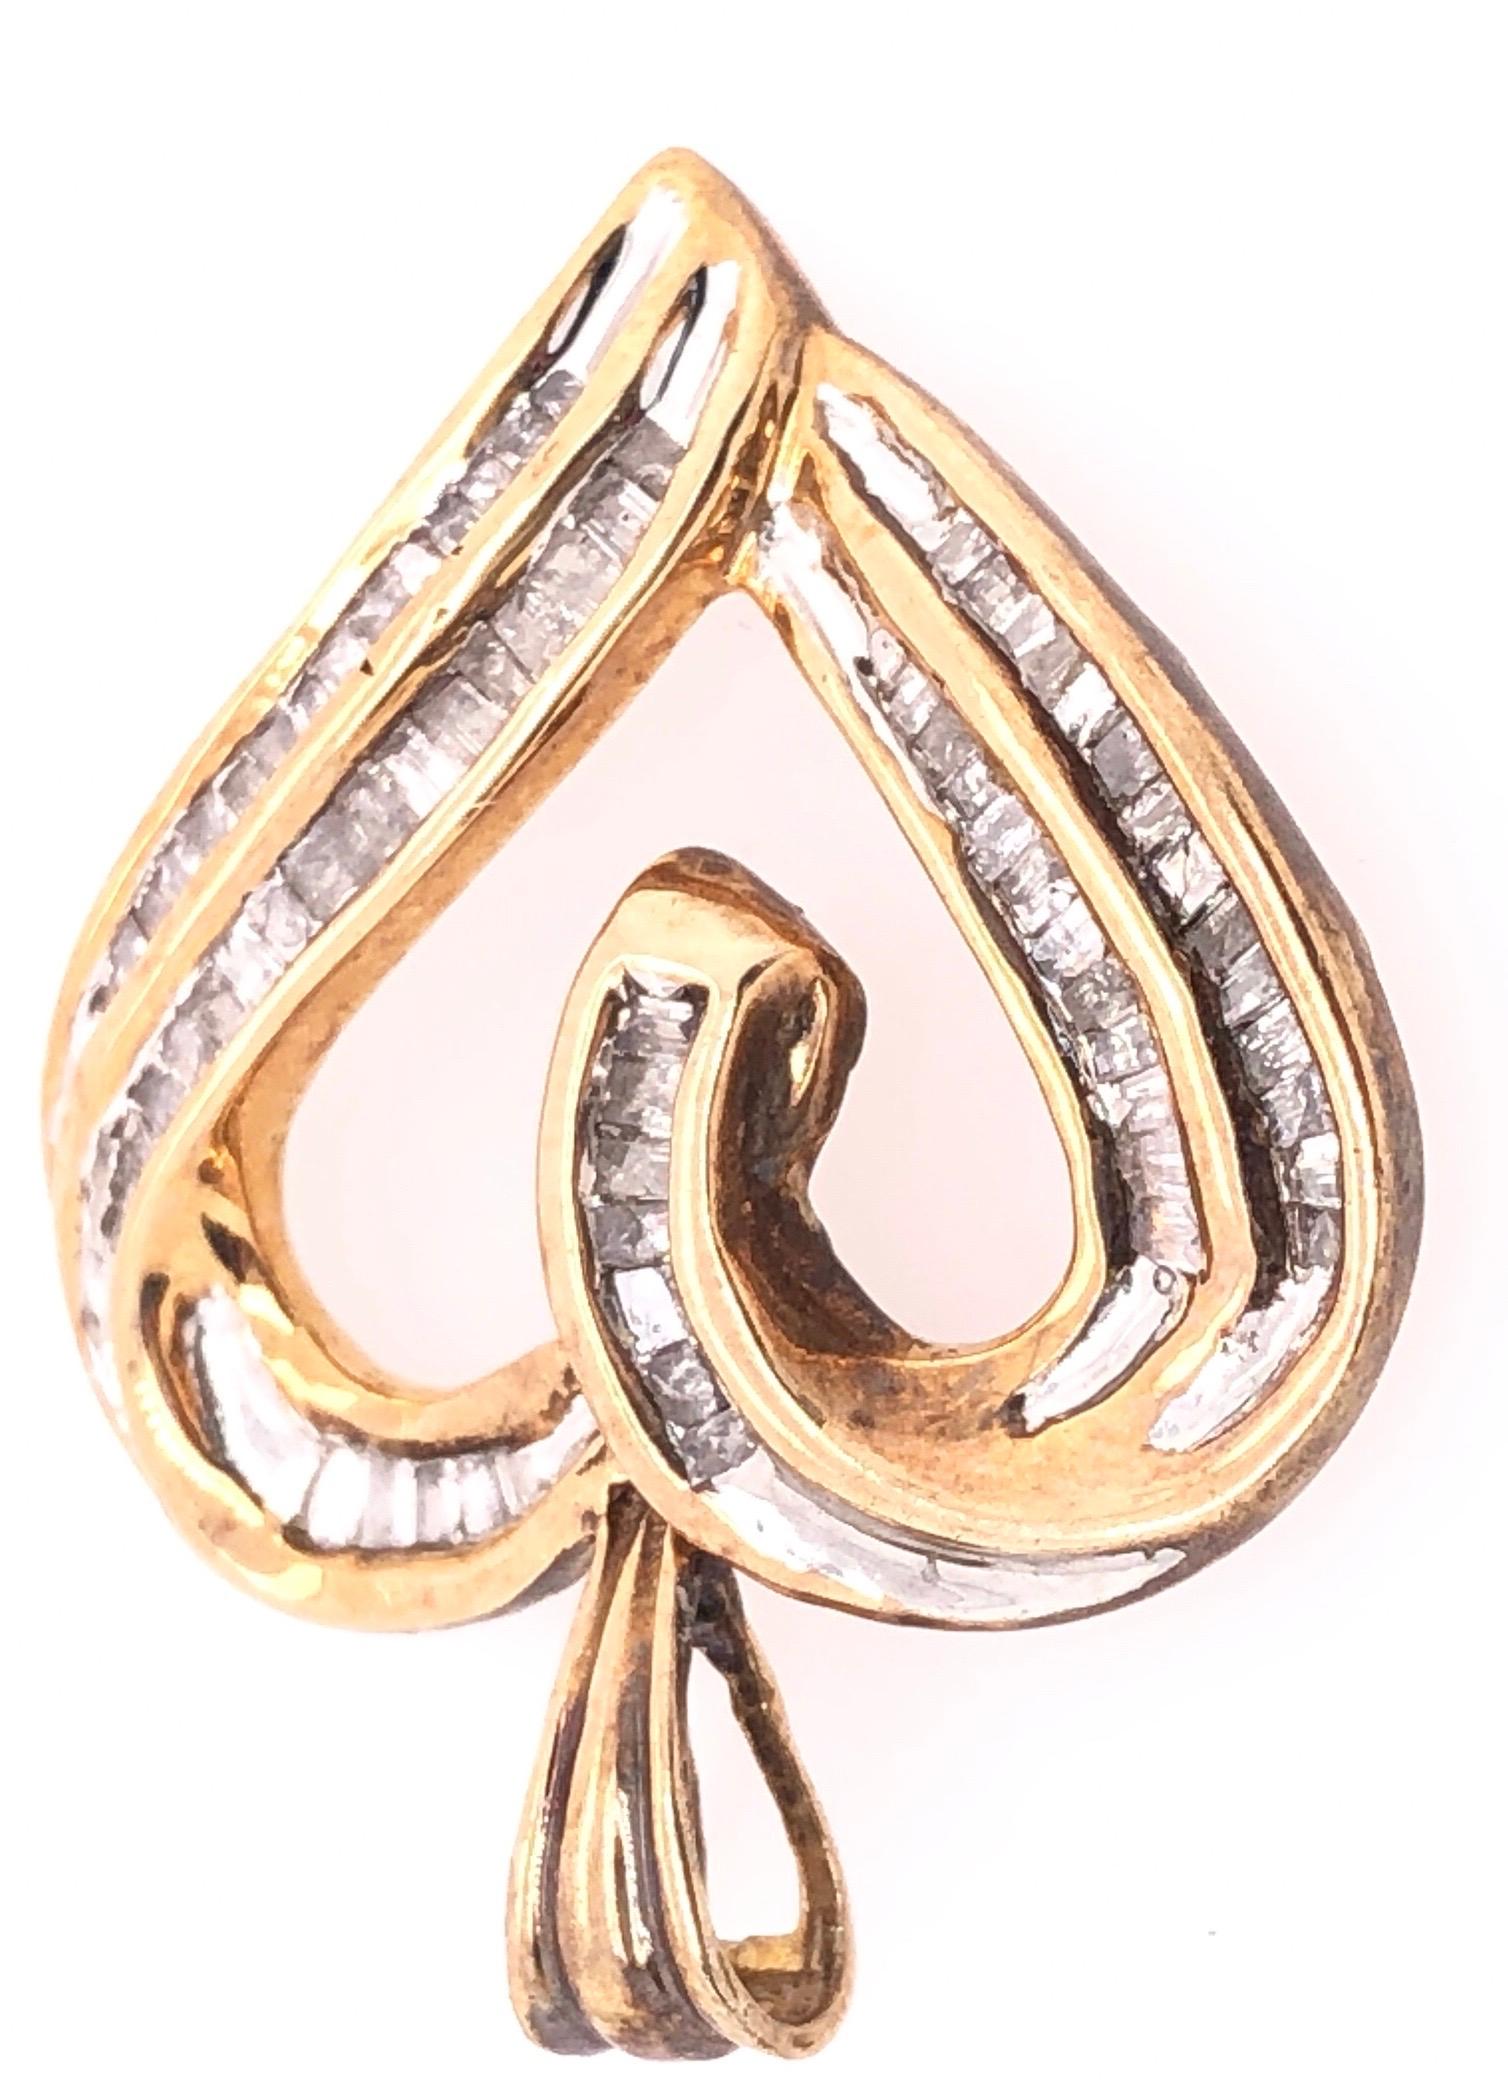 10 Karat Yellow Gold Heart Charm/Pendant with Diamonds .
4.67 grams total weight.